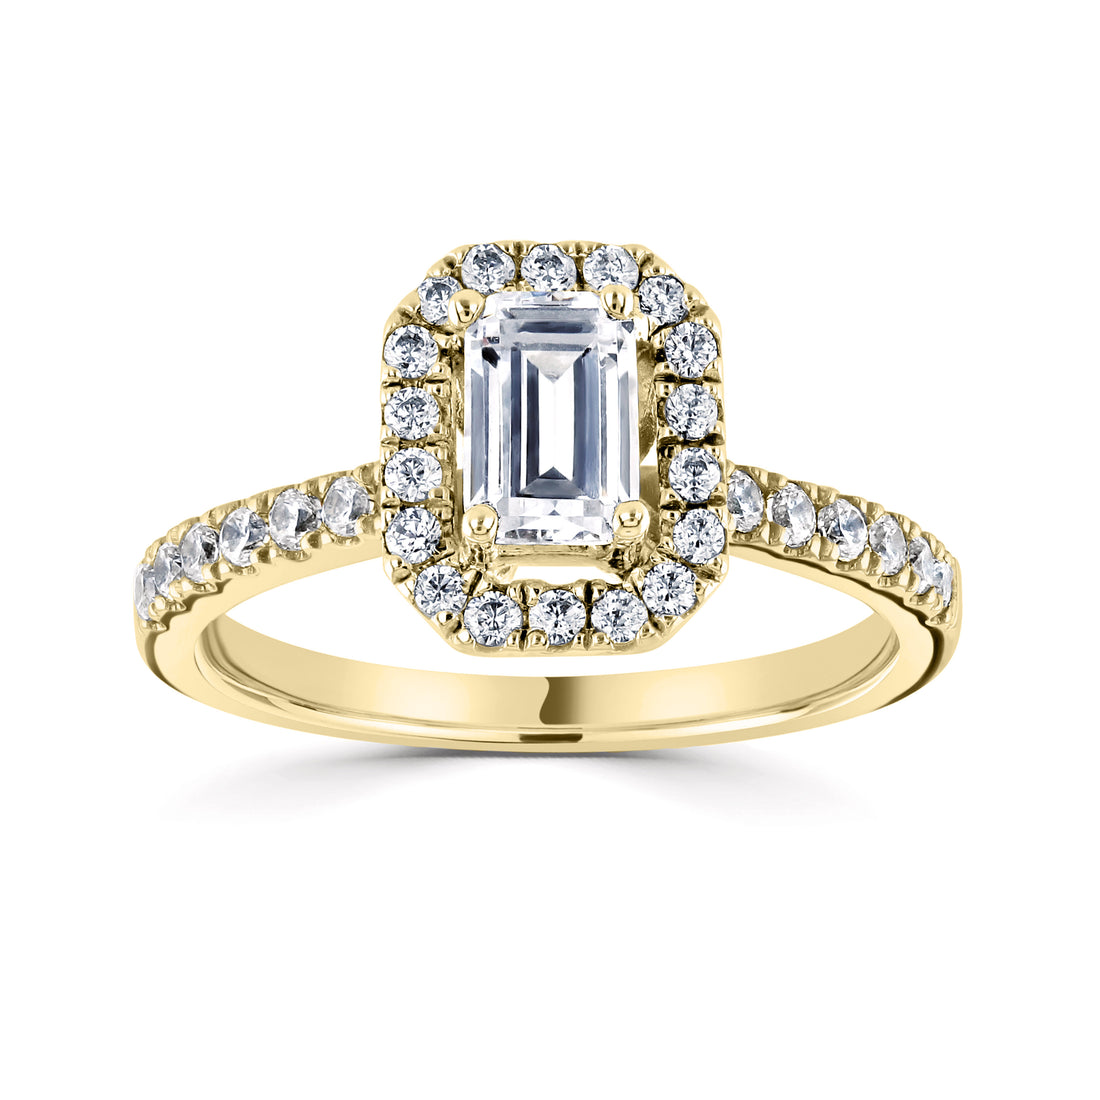 18CT Yellow Gold Emerald Cut Diamond Halo Ring with Diamond Shoulders - Robert Anthony Jewellers, Edinburgh